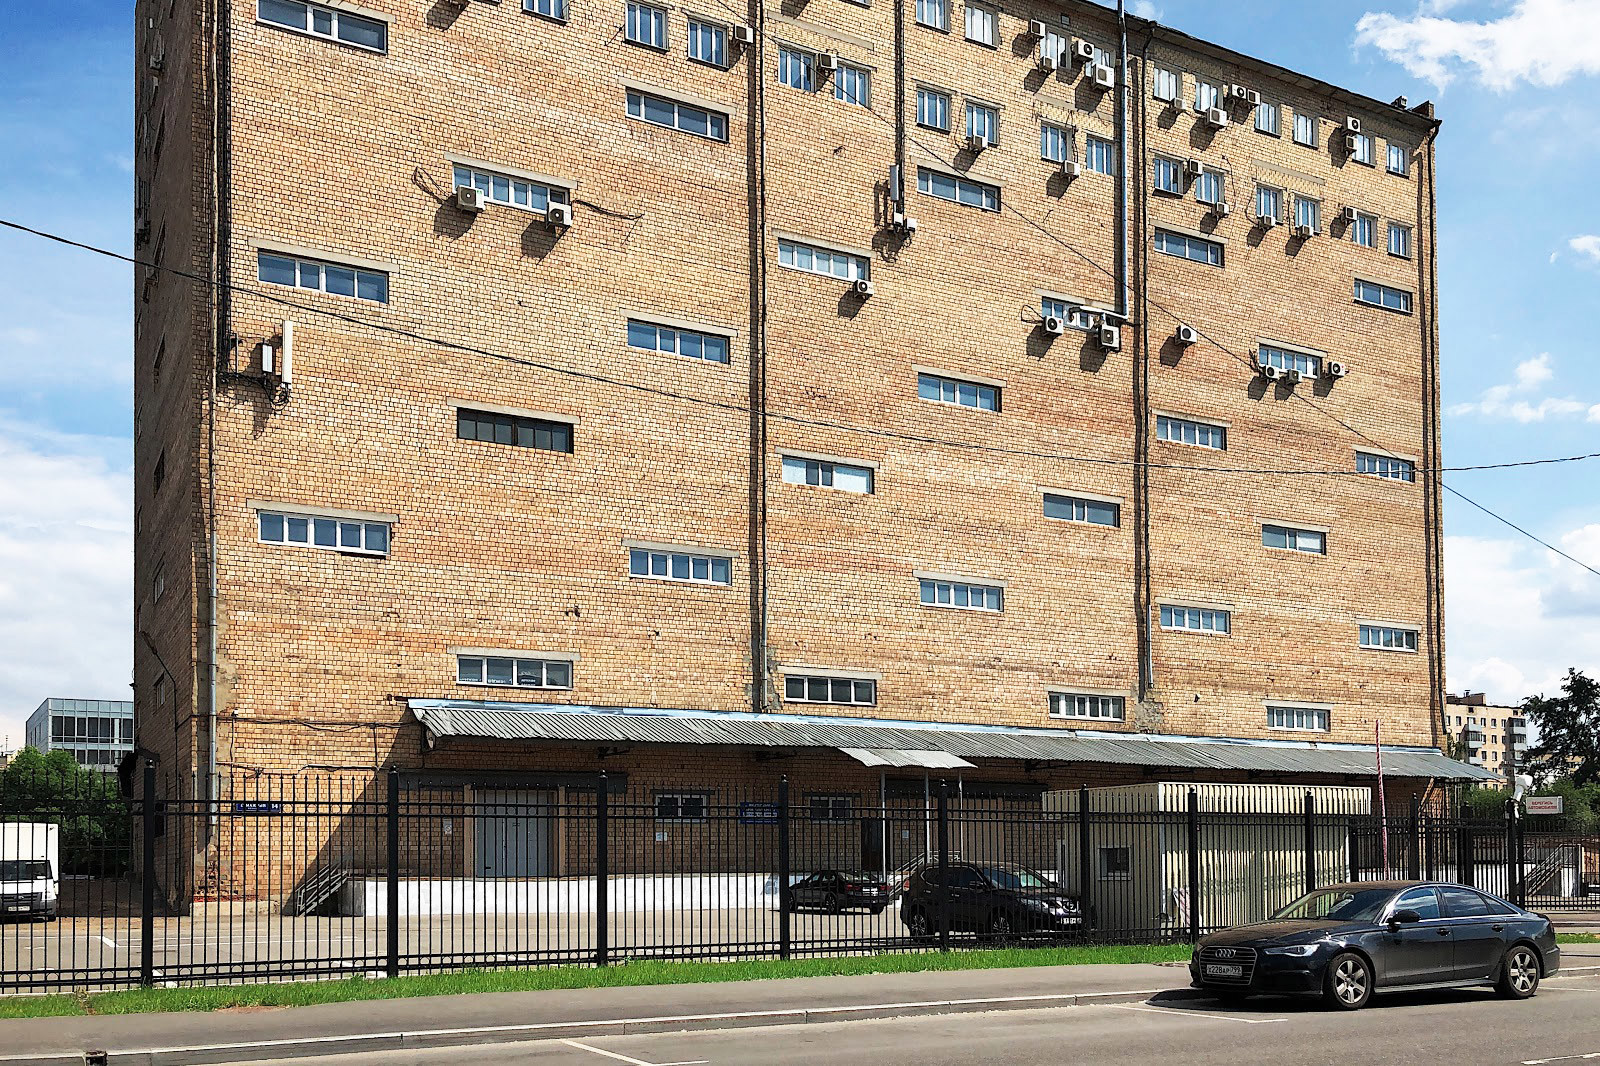 Bumazhny Proezd Str., office/warehouse building, former warehouse of Pravda publishing house